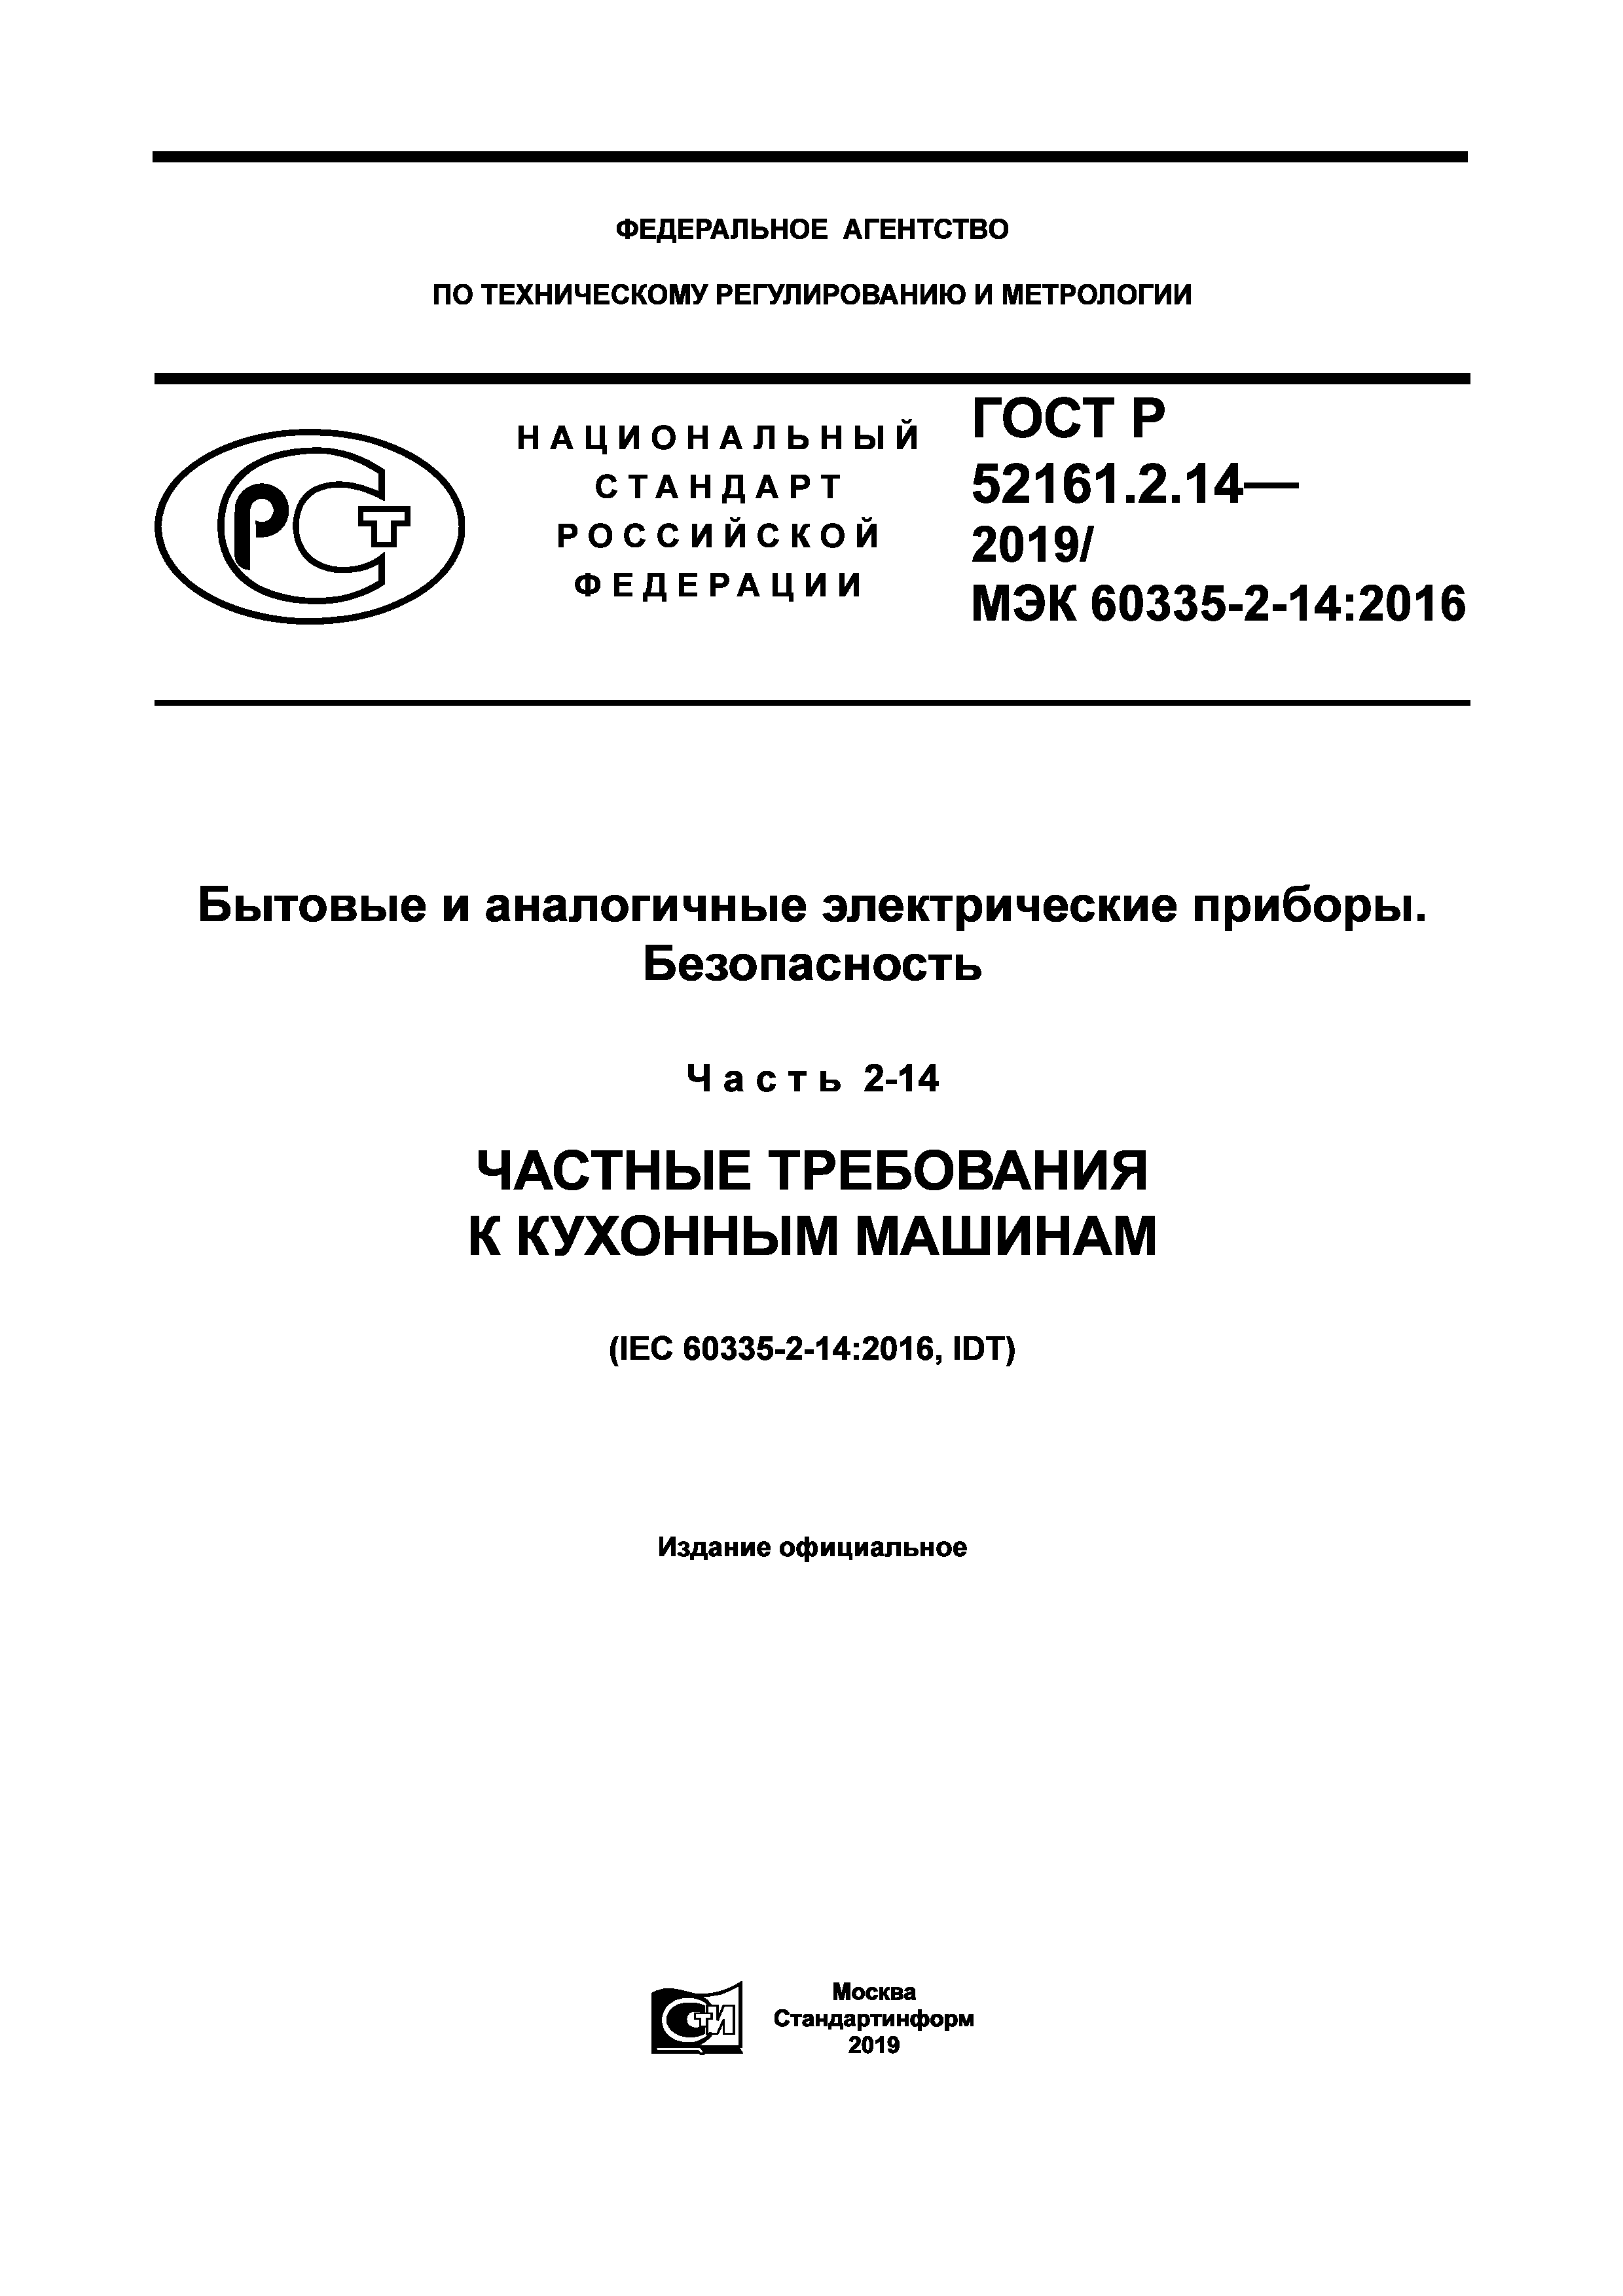 ГОСТ Р 52161.2.14-2019